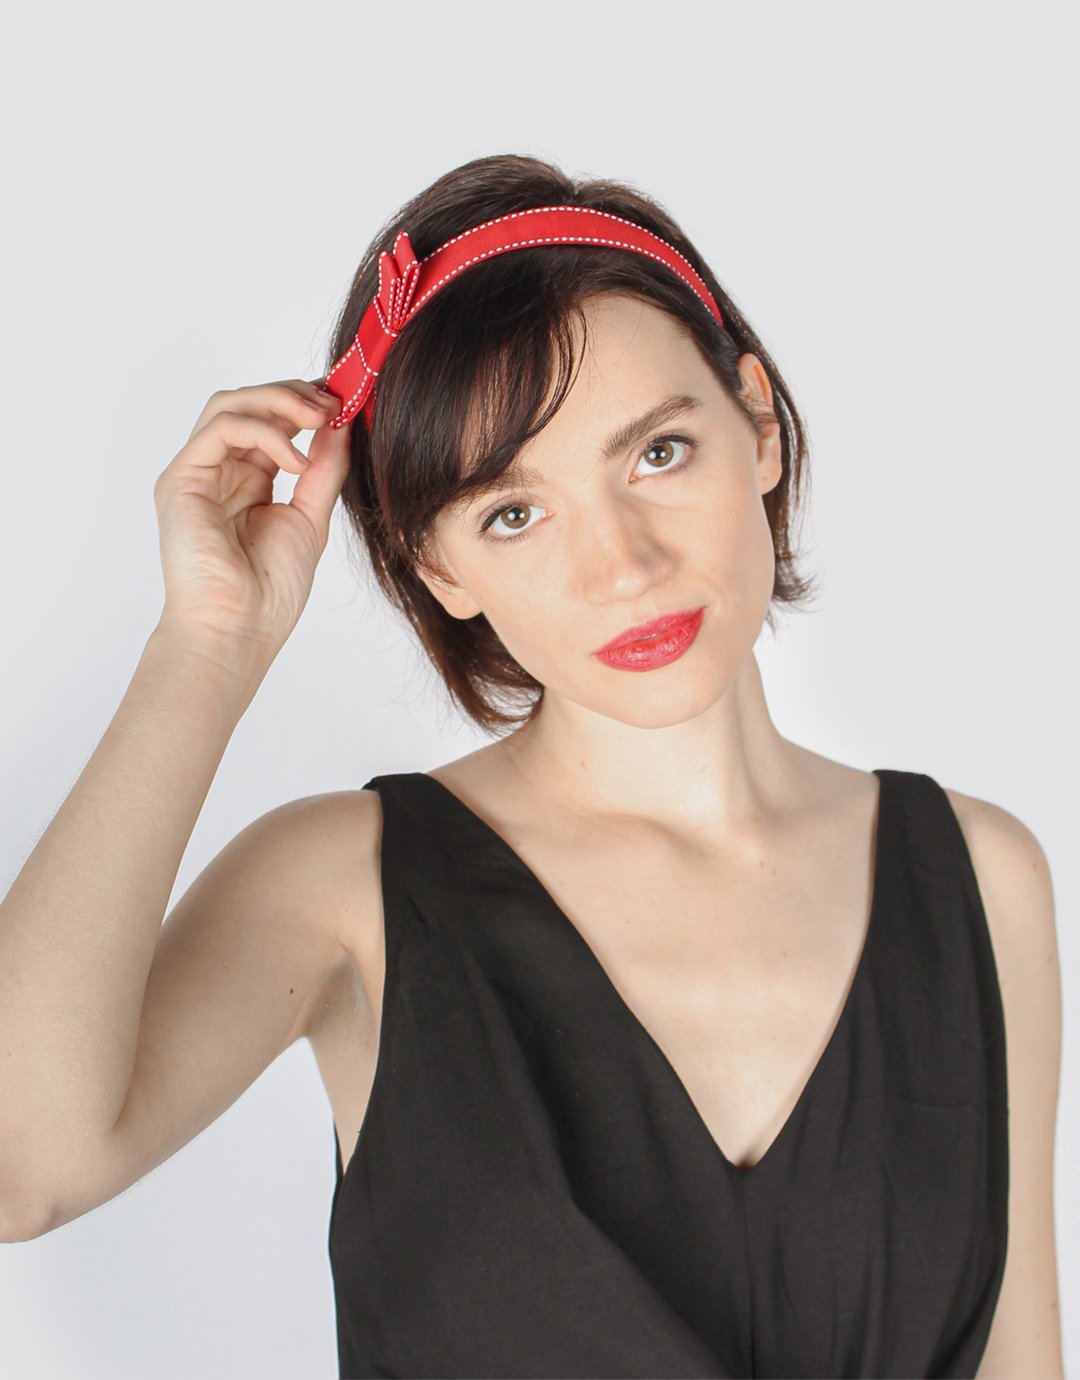 BANDED Women’s Premium Headband - Red Bandeau Heaband